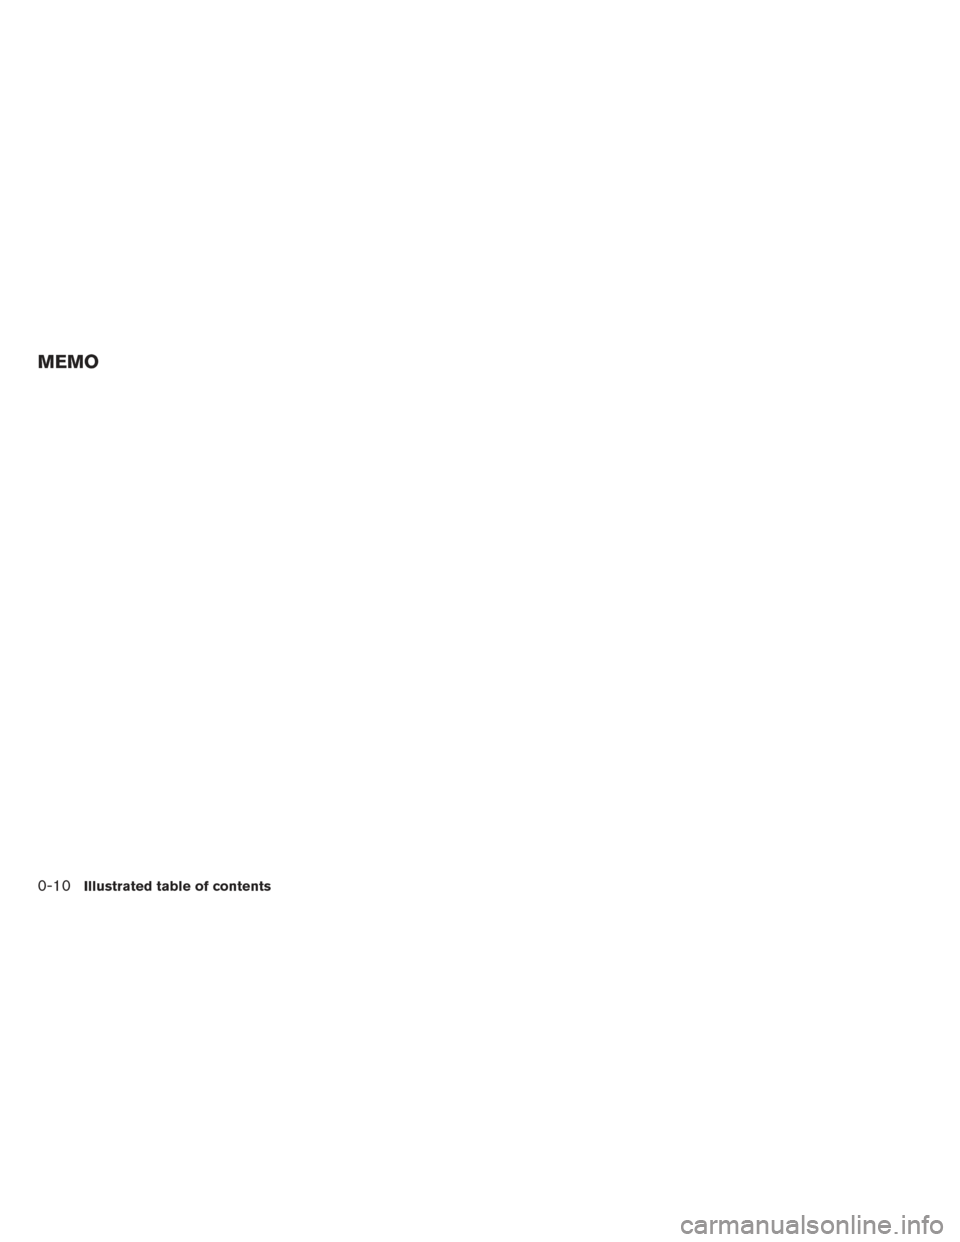 NISSAN VERSA SEDAN 2014 2.G User Guide MEMO
0-10Illustrated table of contents 